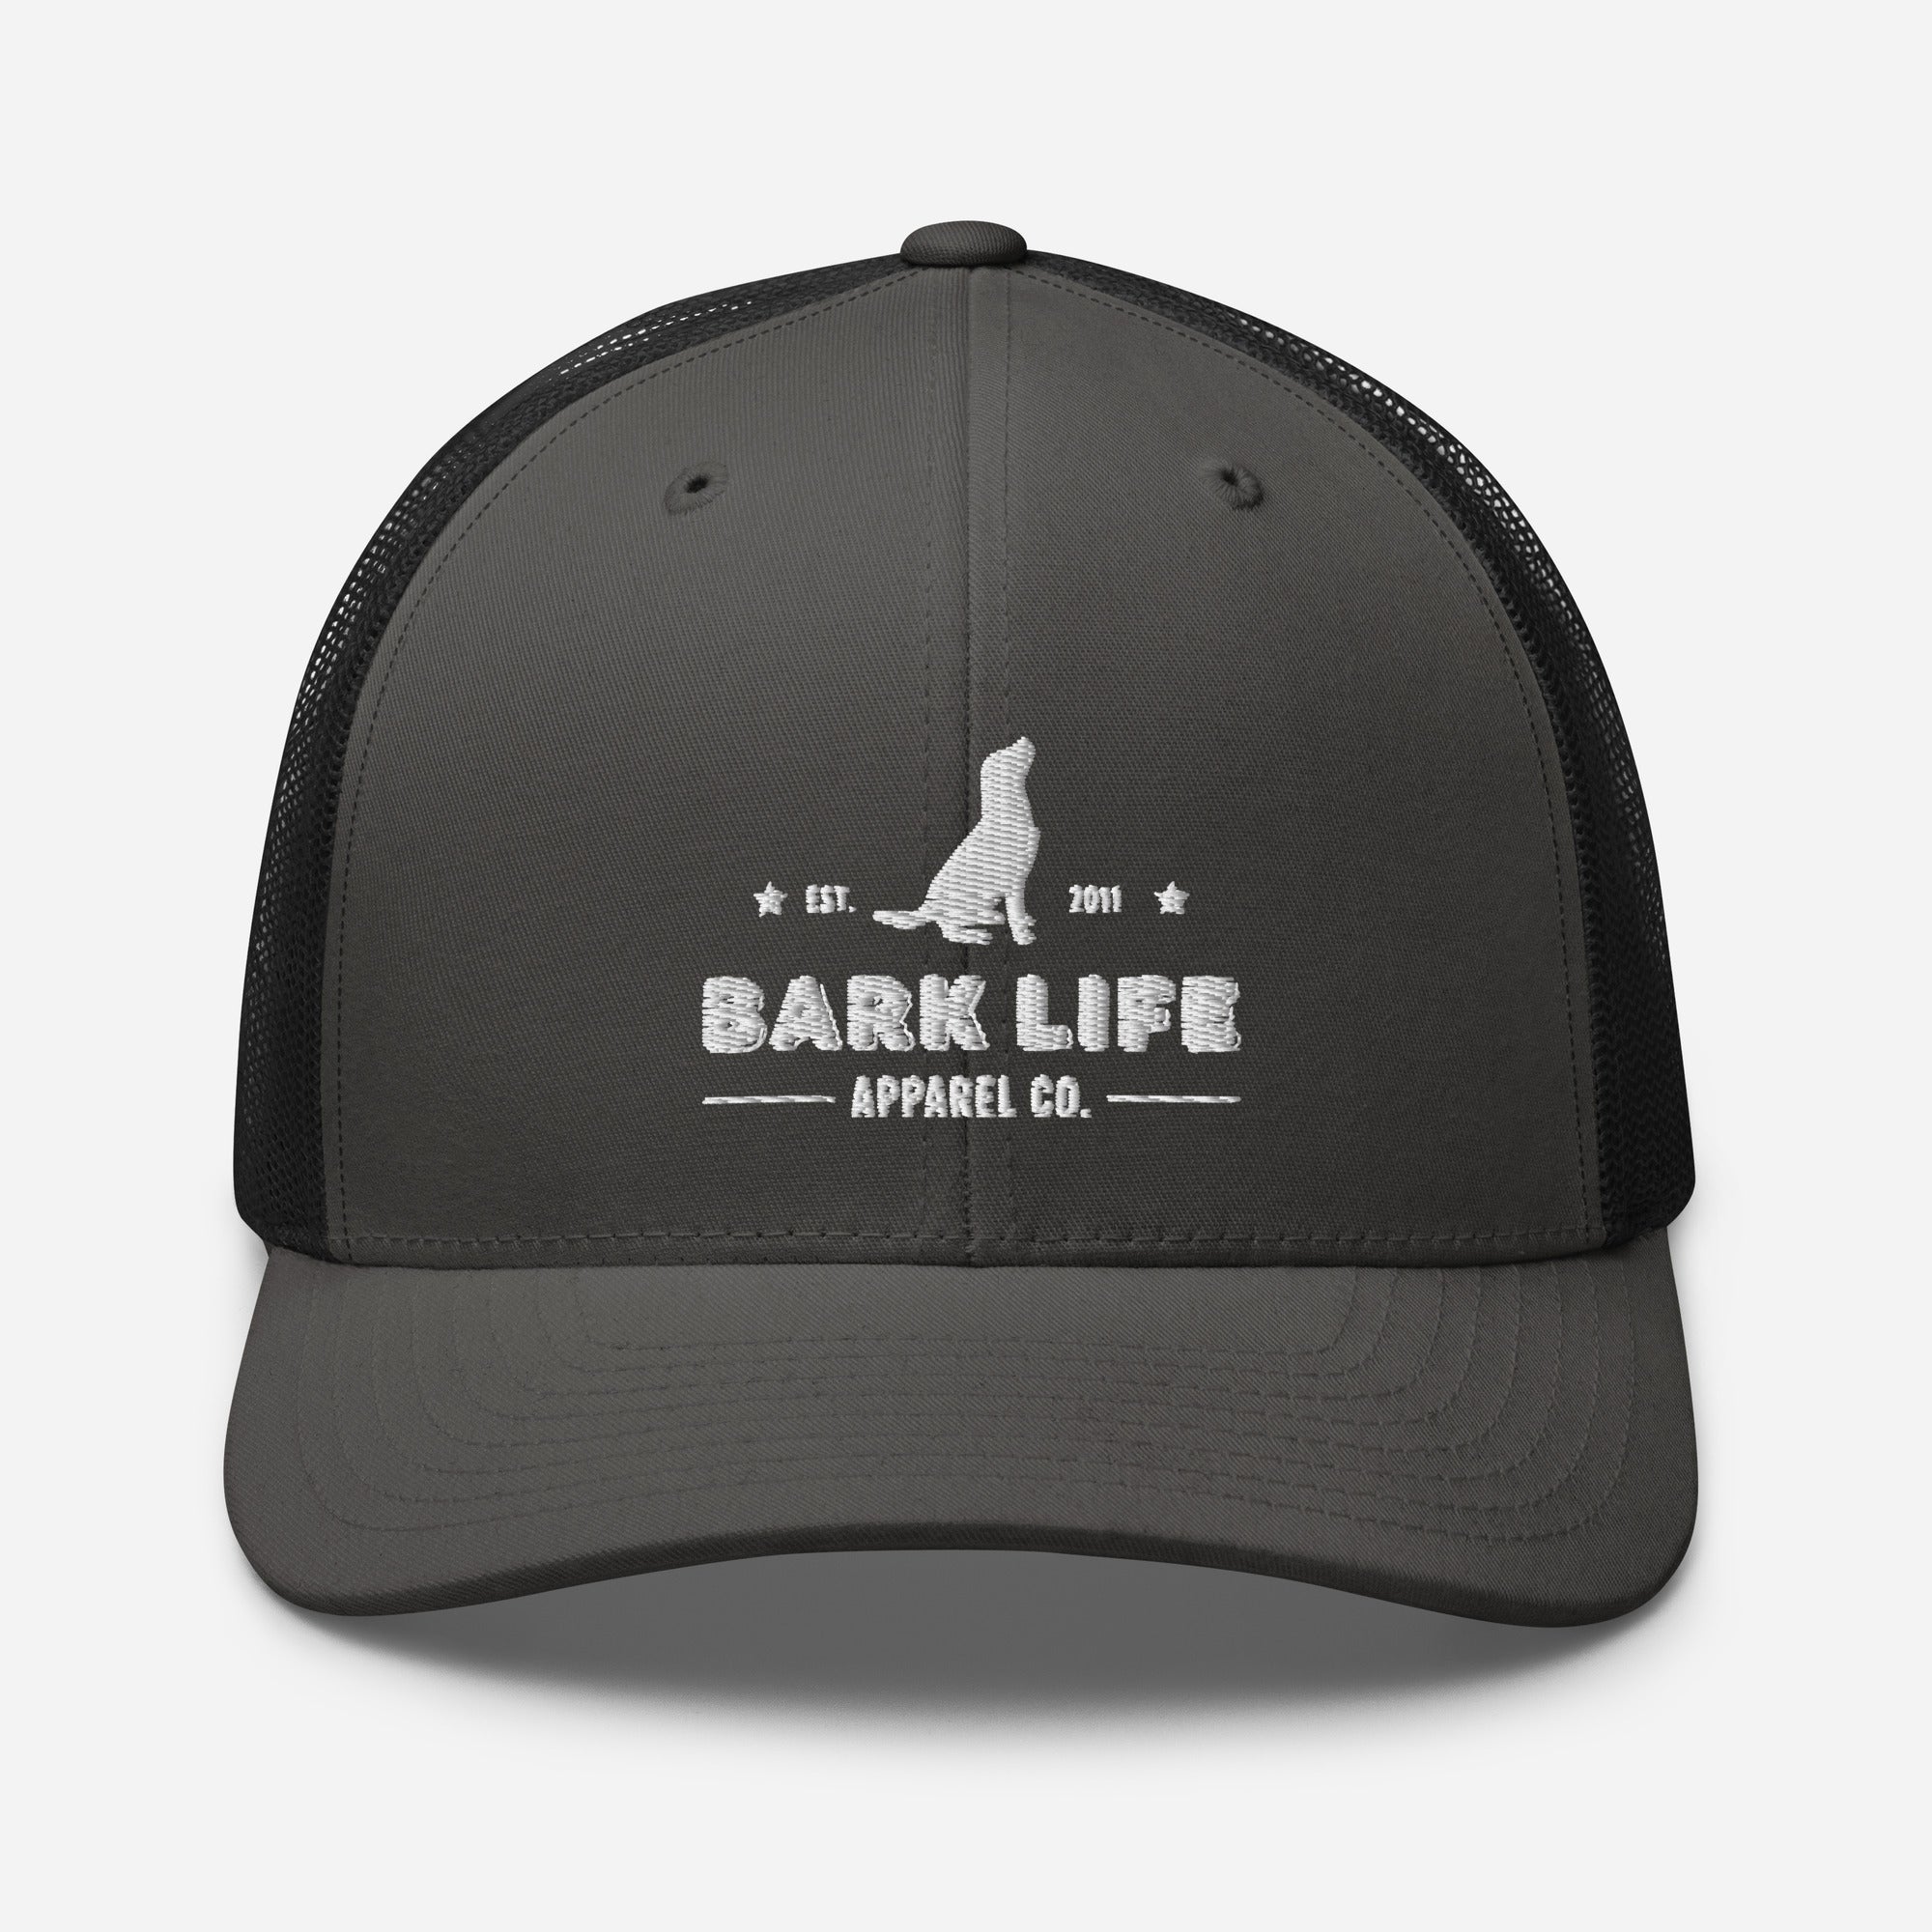 Labrador - Hat